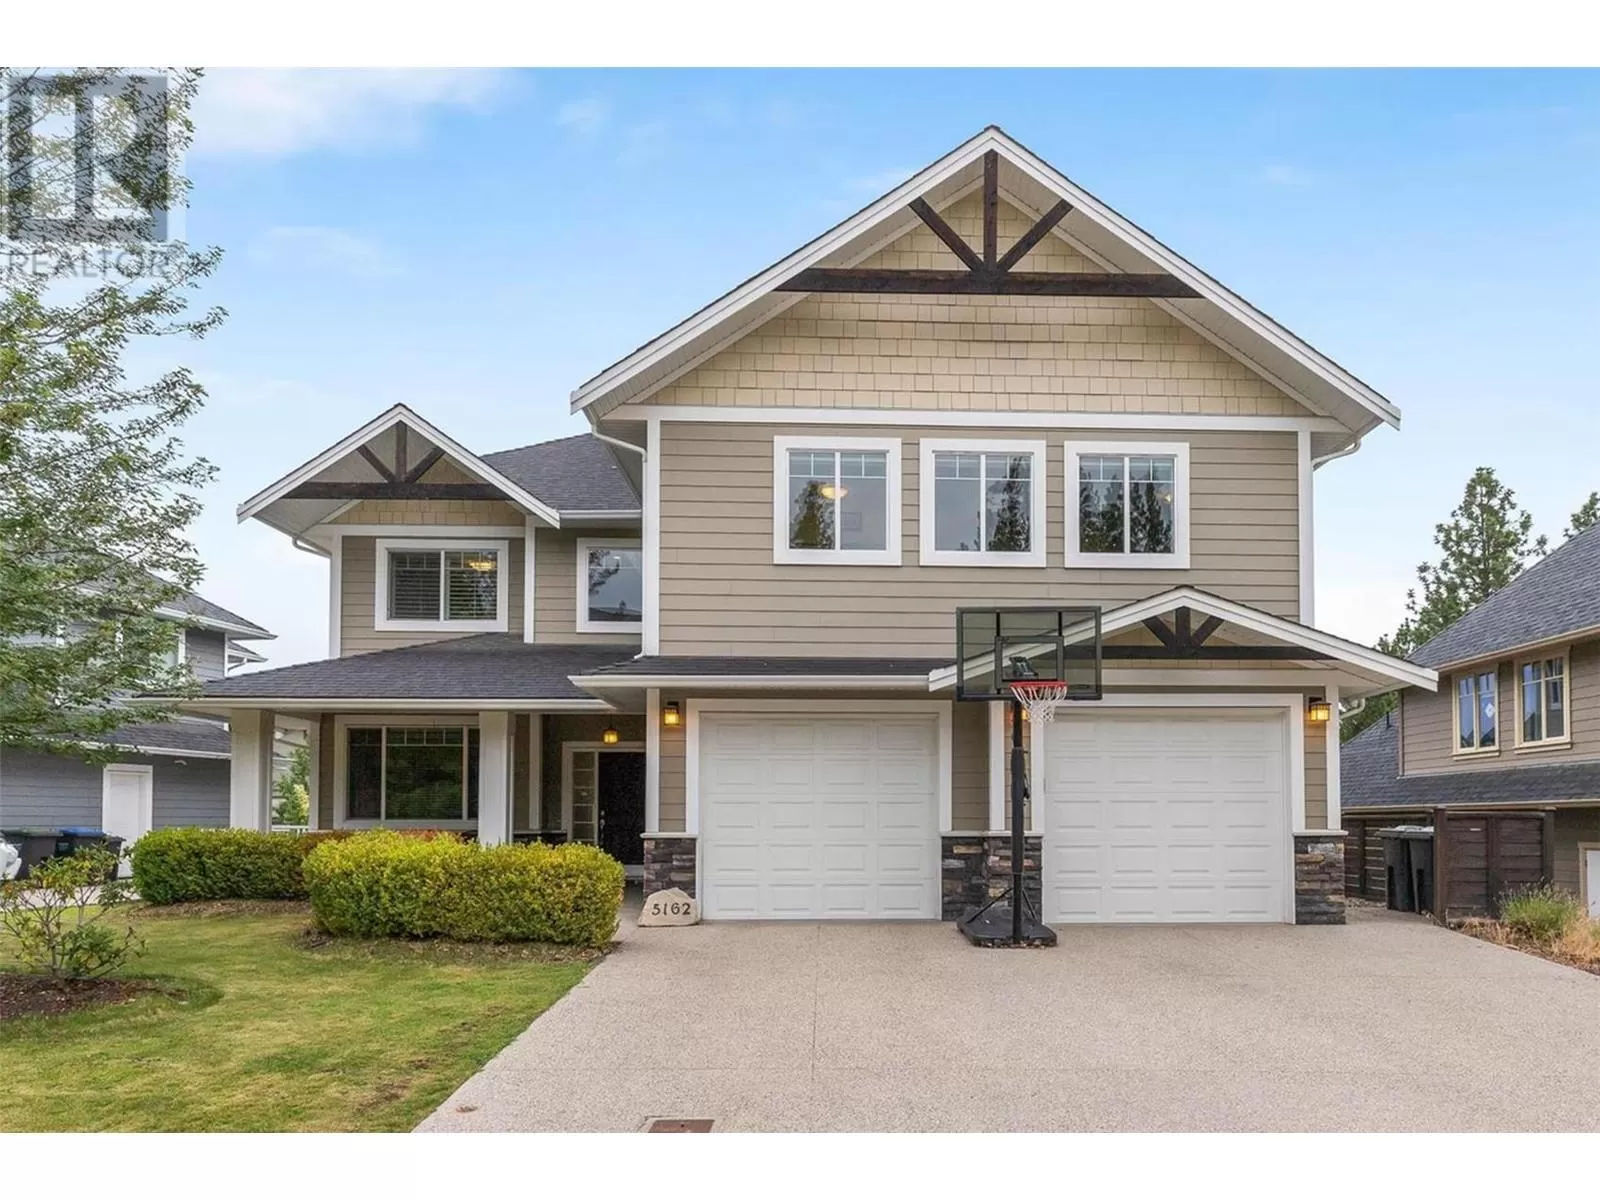 House for rent: 5162 Chute Lake Crescent, Kelowna, British Columbia V1W 4L7